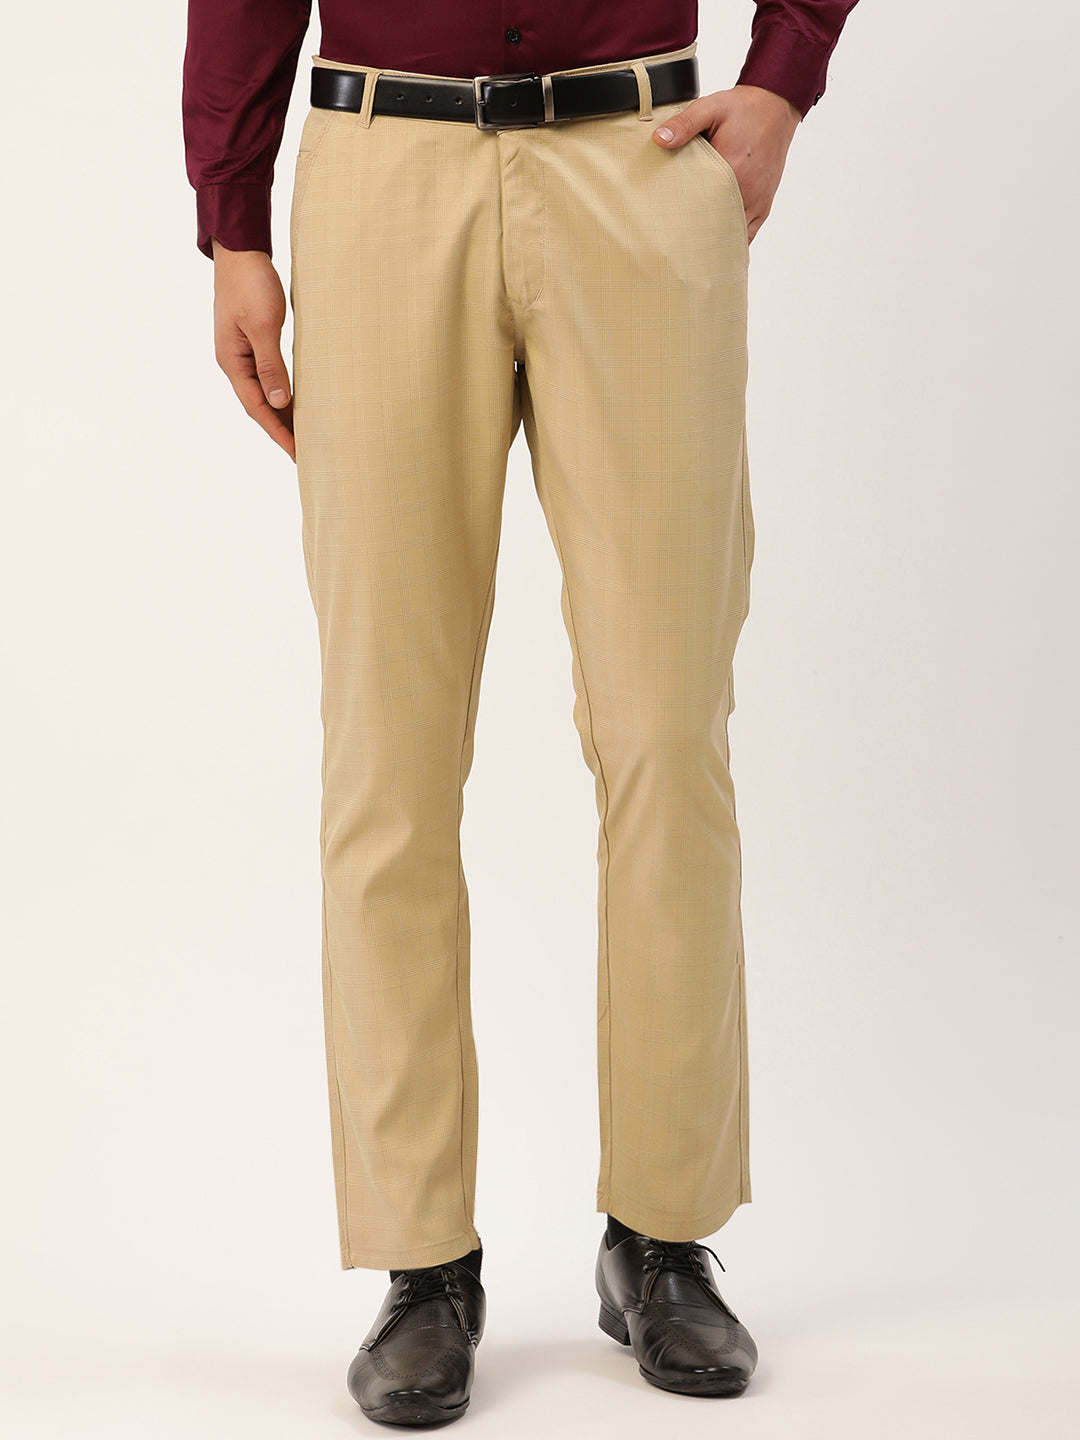 Jainish Men's Beige Checked Formal Trousers